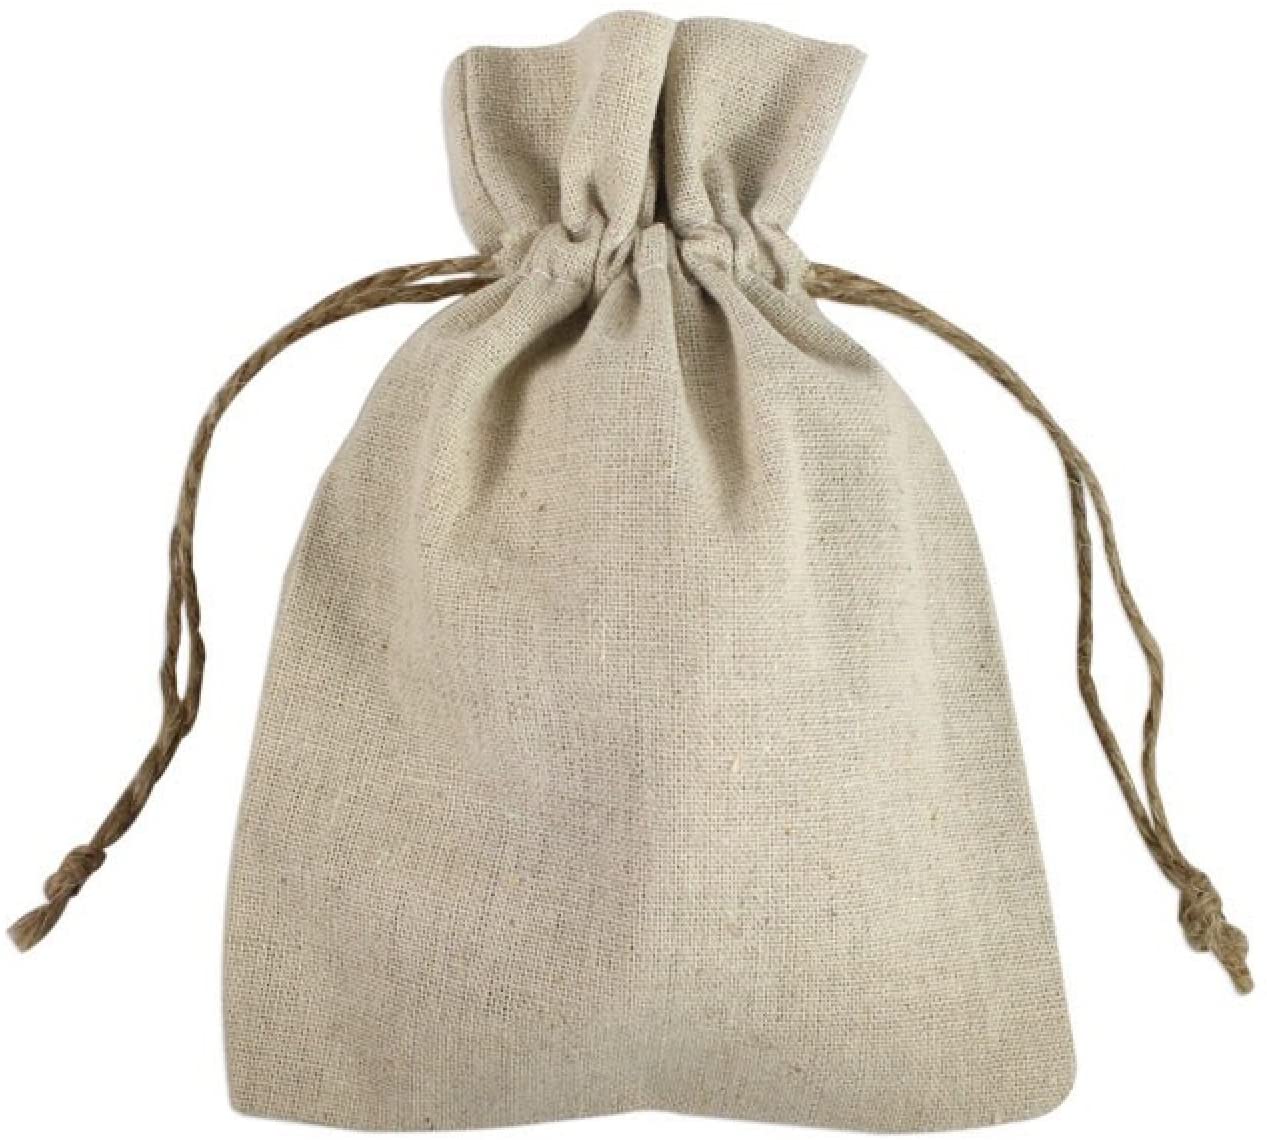 Wholesale Natural Linen Fabric Sacks Bags With Drawstrings, Bulk Muslin Gift Small Mini Bags